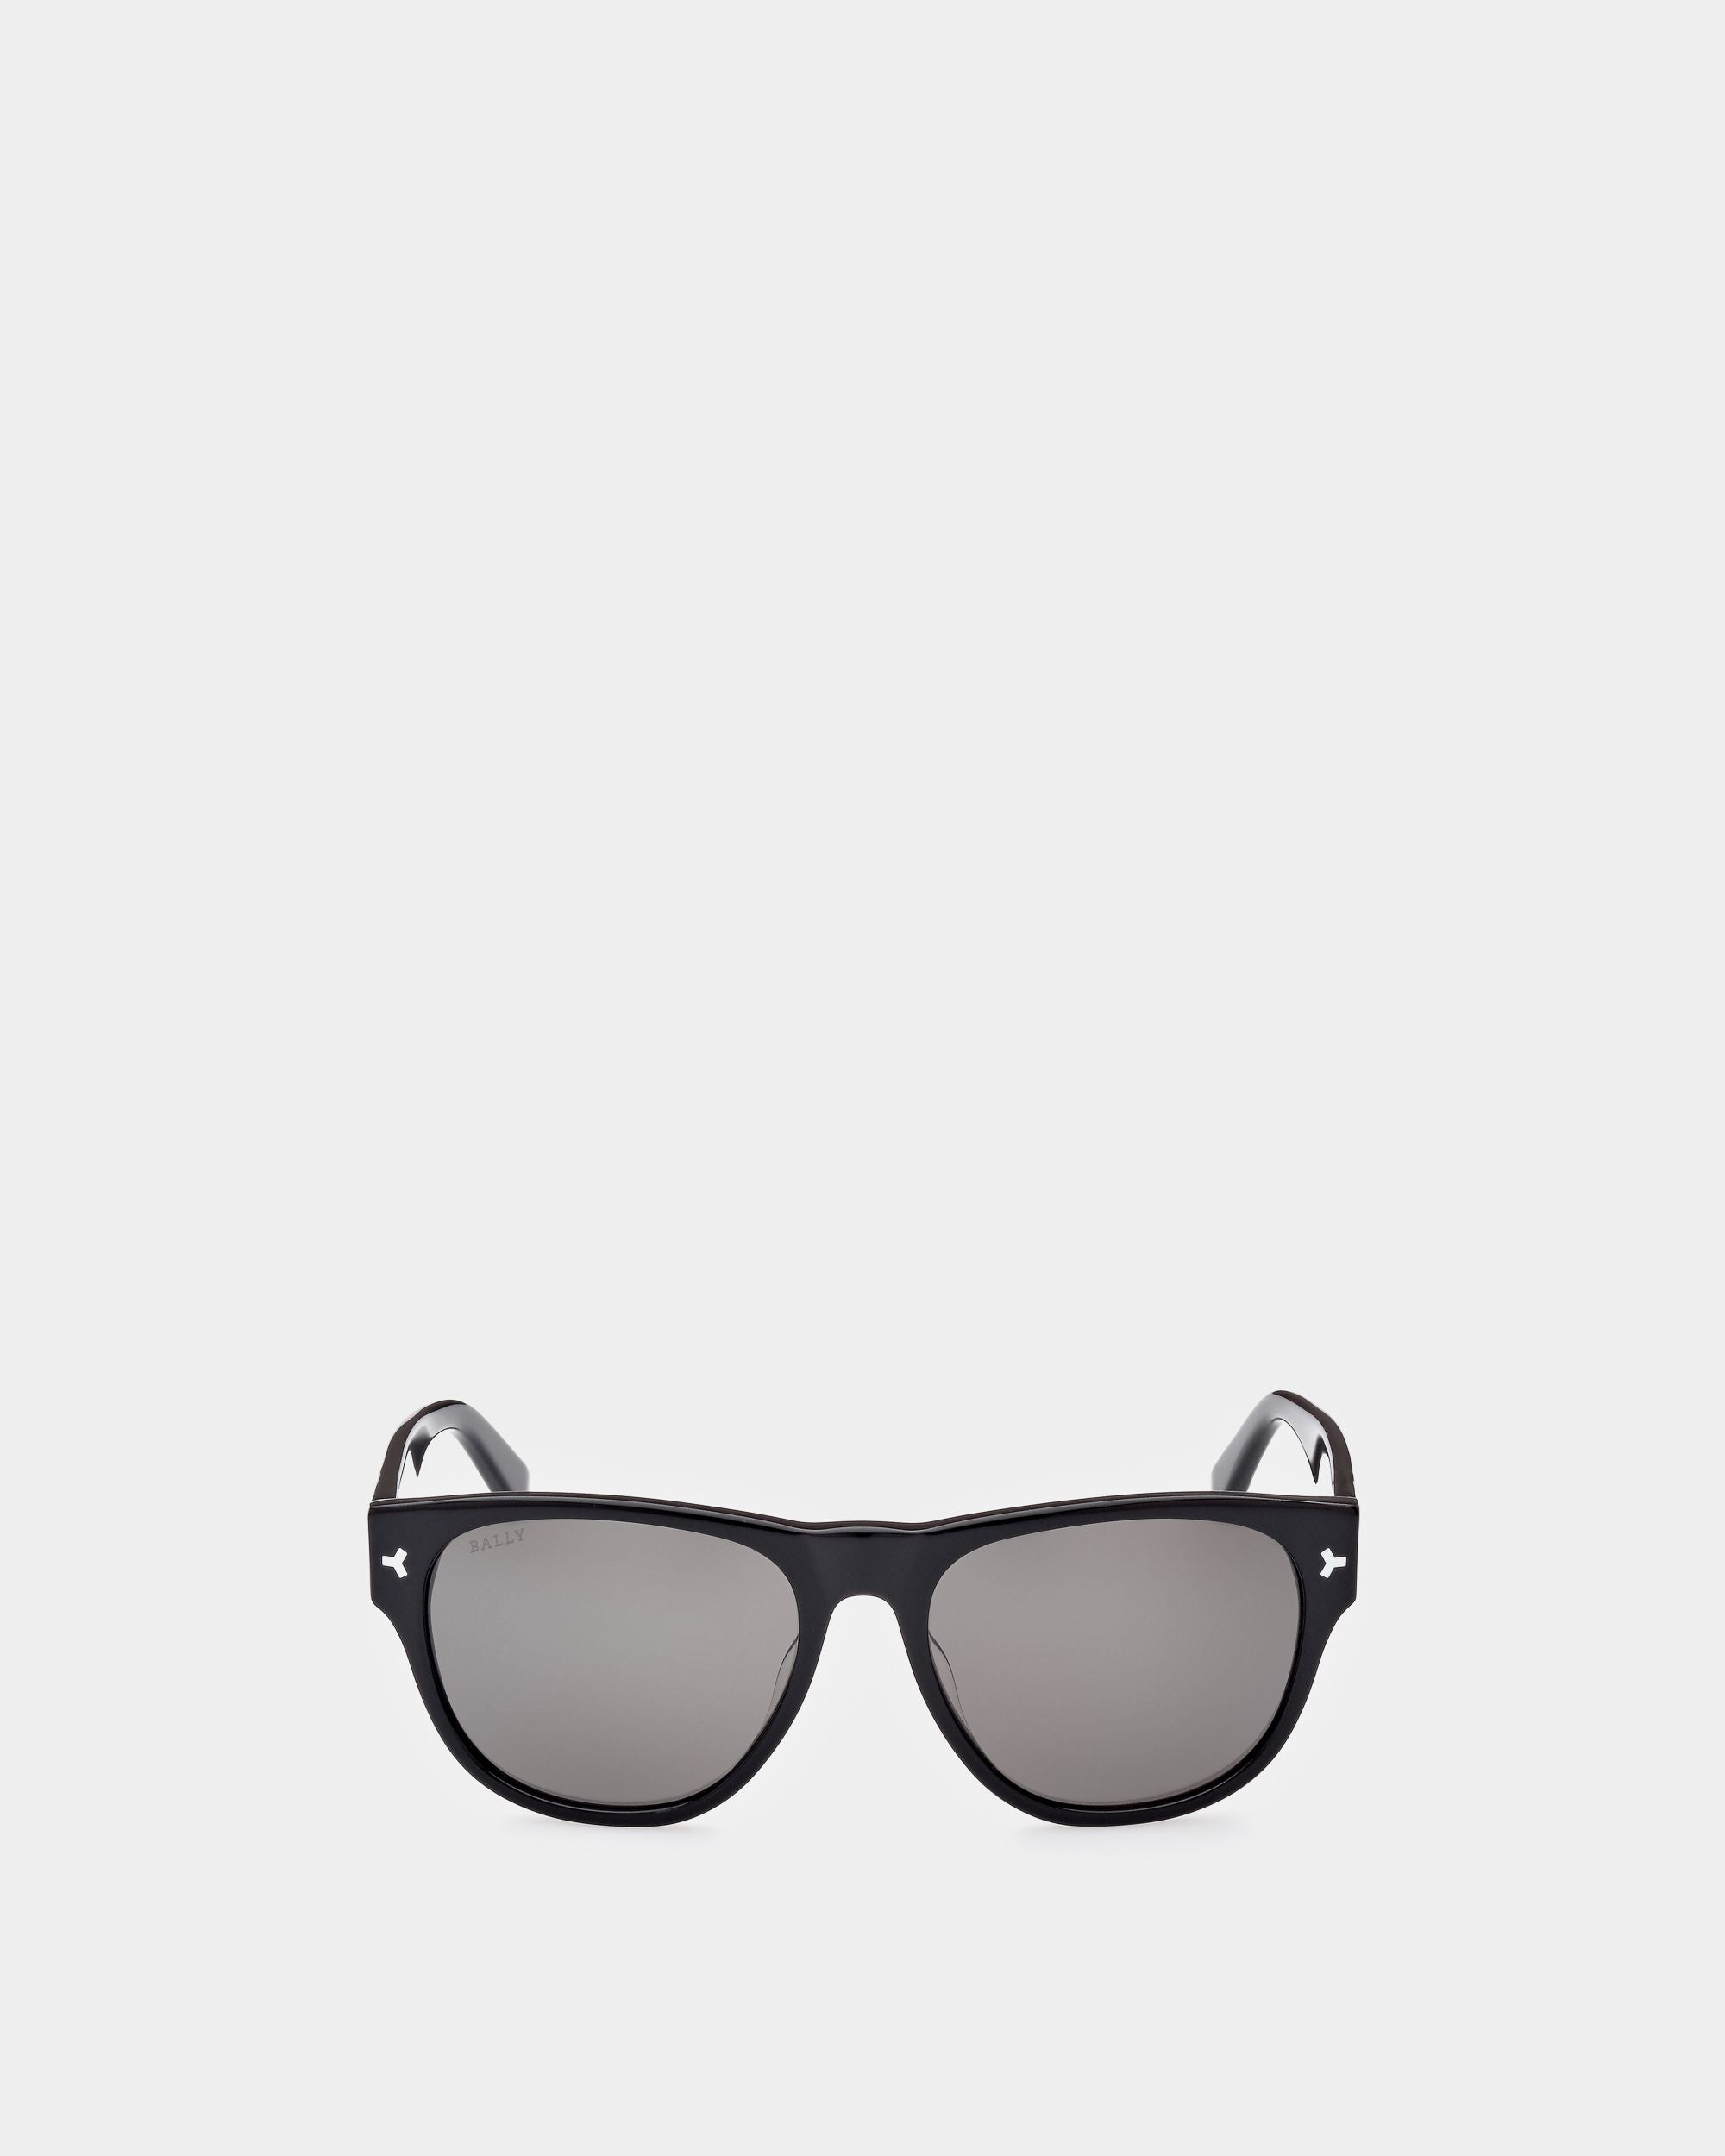 Designer Sunglasses For Men Aviators Wayfarers And More Bally